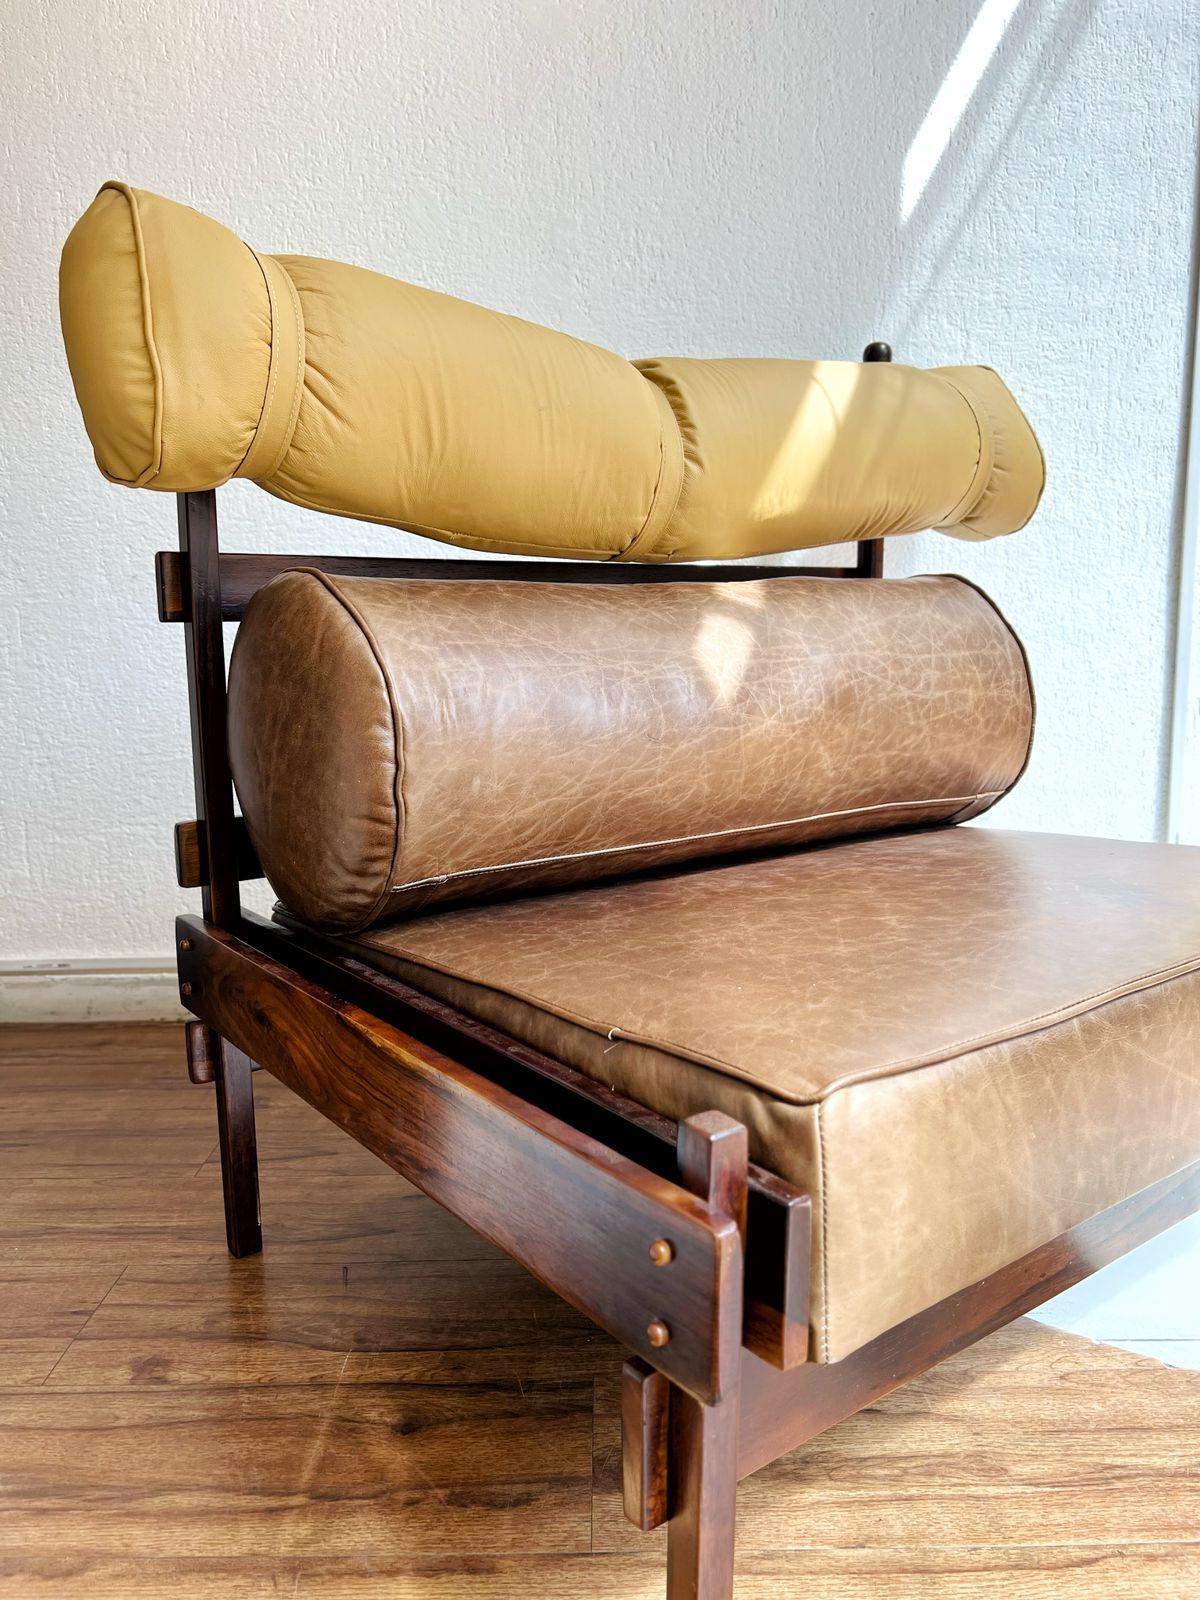 Beautiful vintage Tonico Chair in Pau Ferro Wood by Sergio Rodrigues.